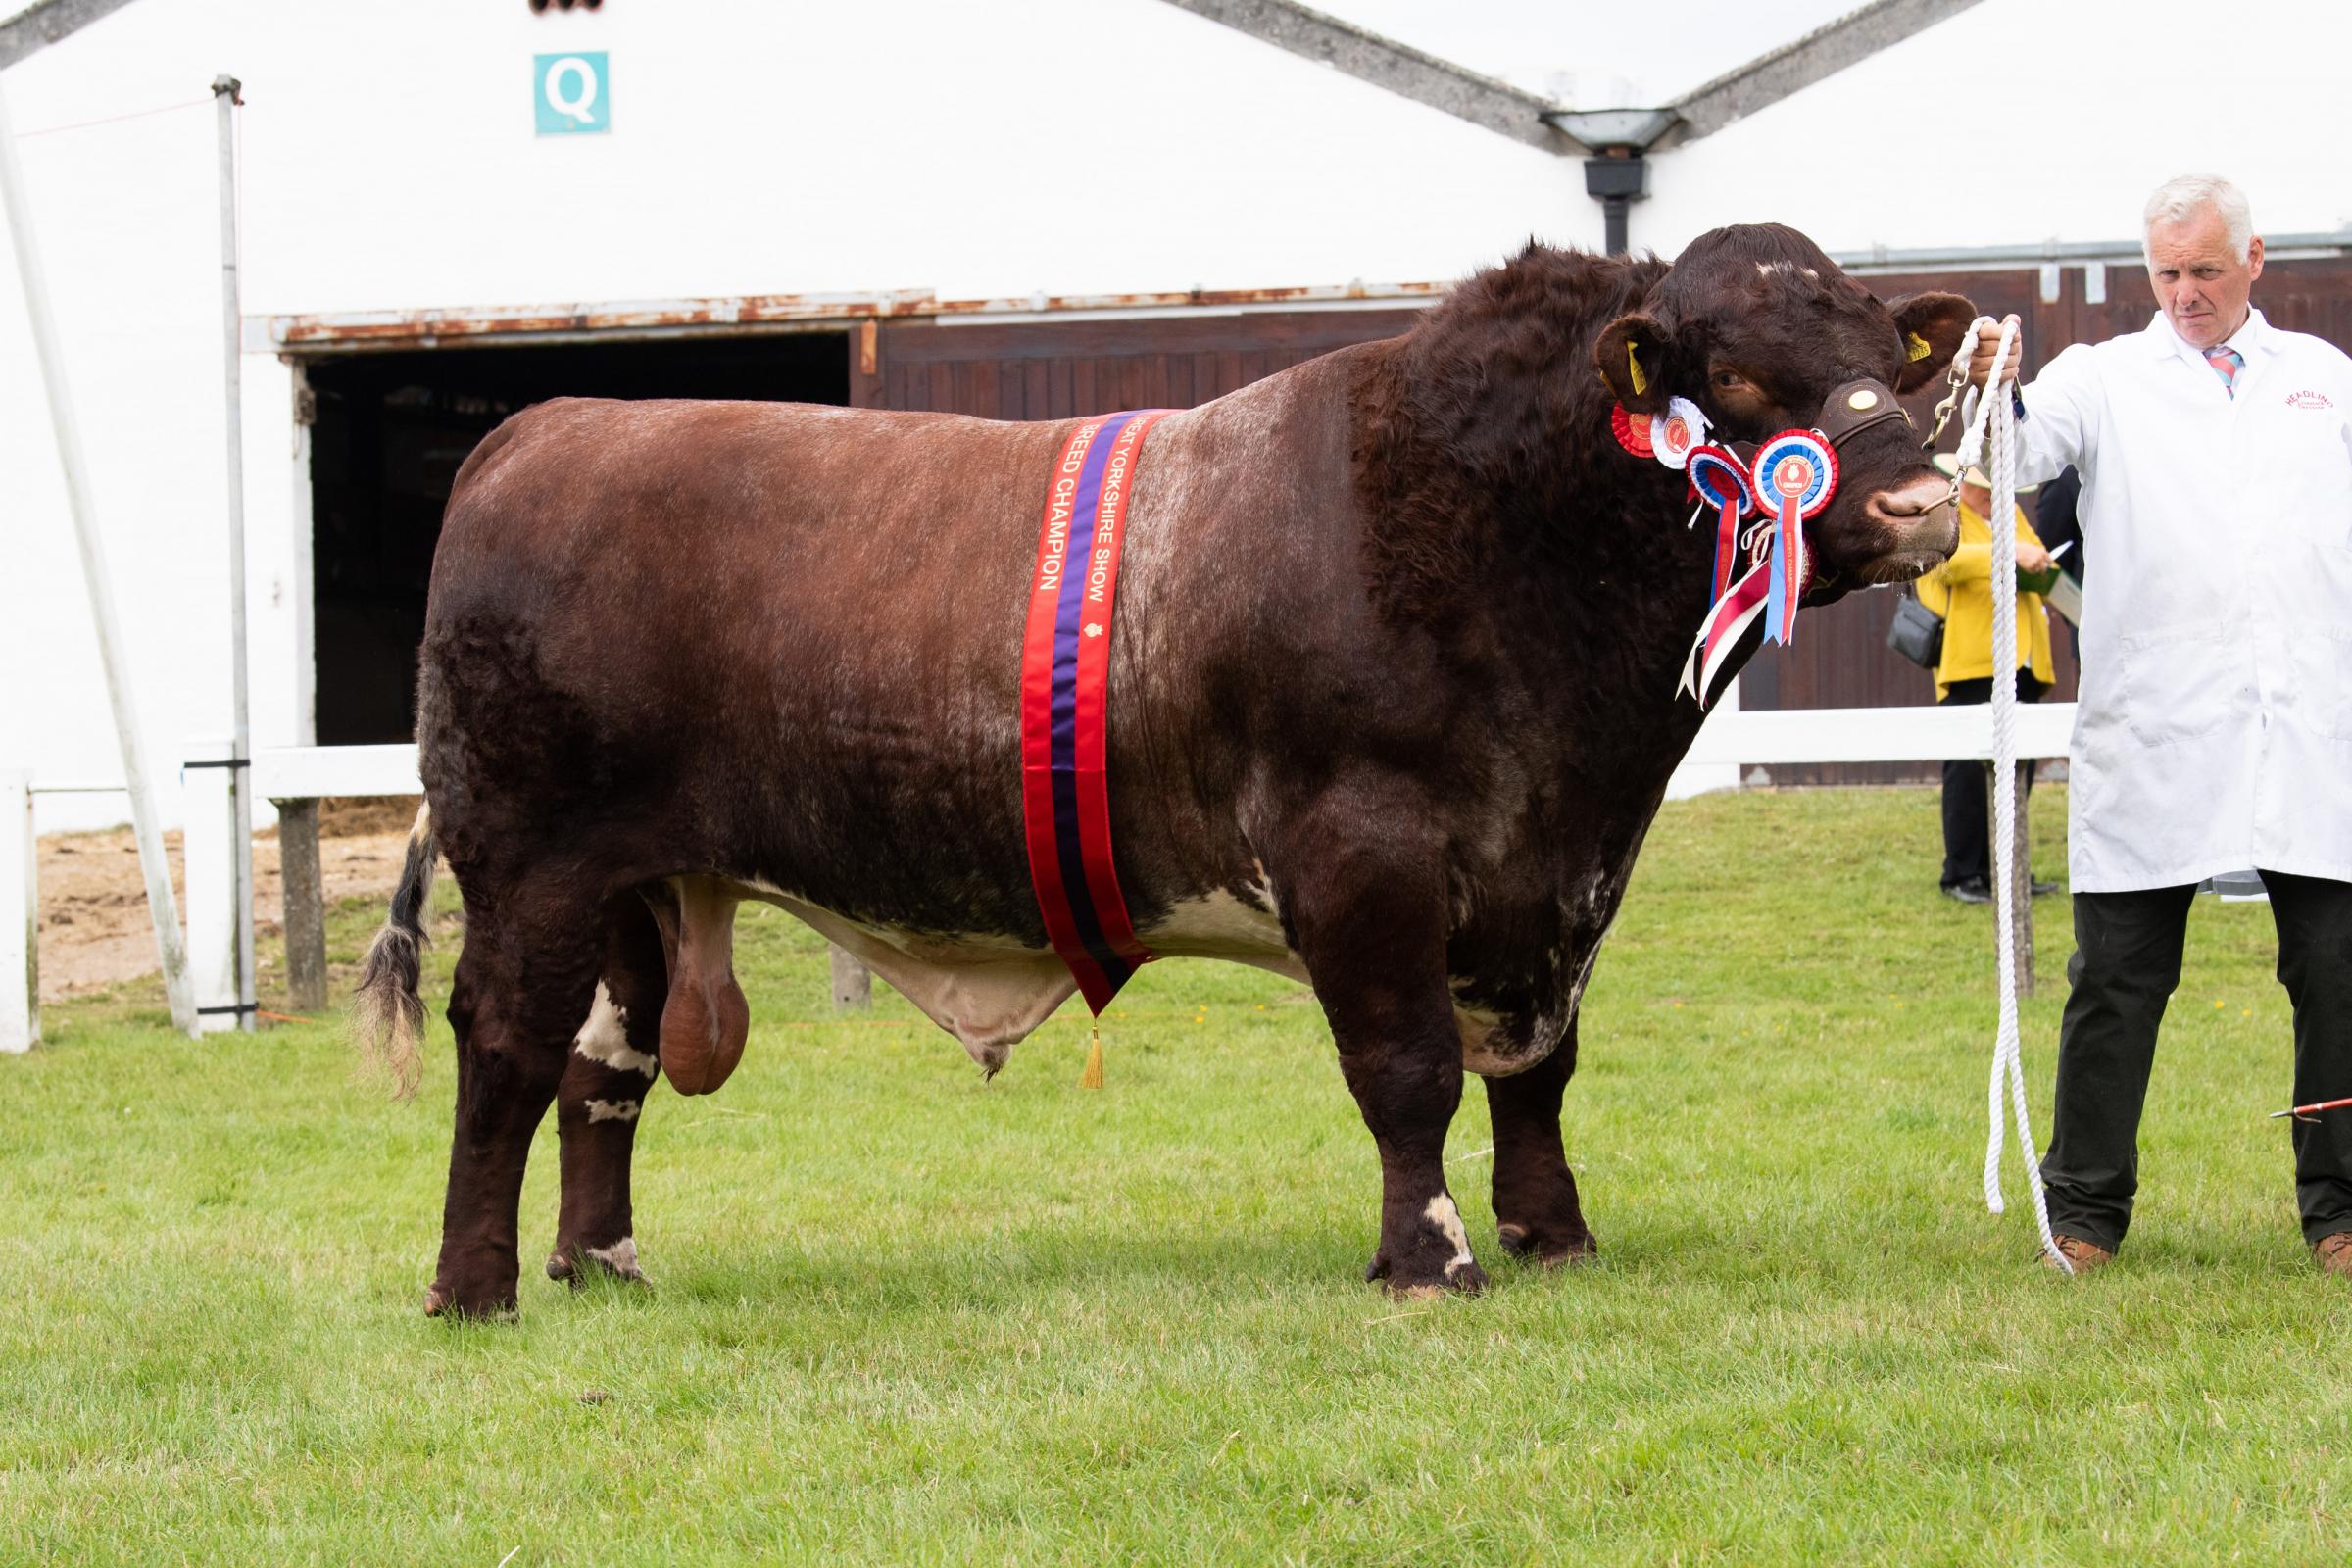 Alan Jacksons Shorthorn bull stood champion Ref:RH150721069 Rob Haining / The Scottish Farmer...